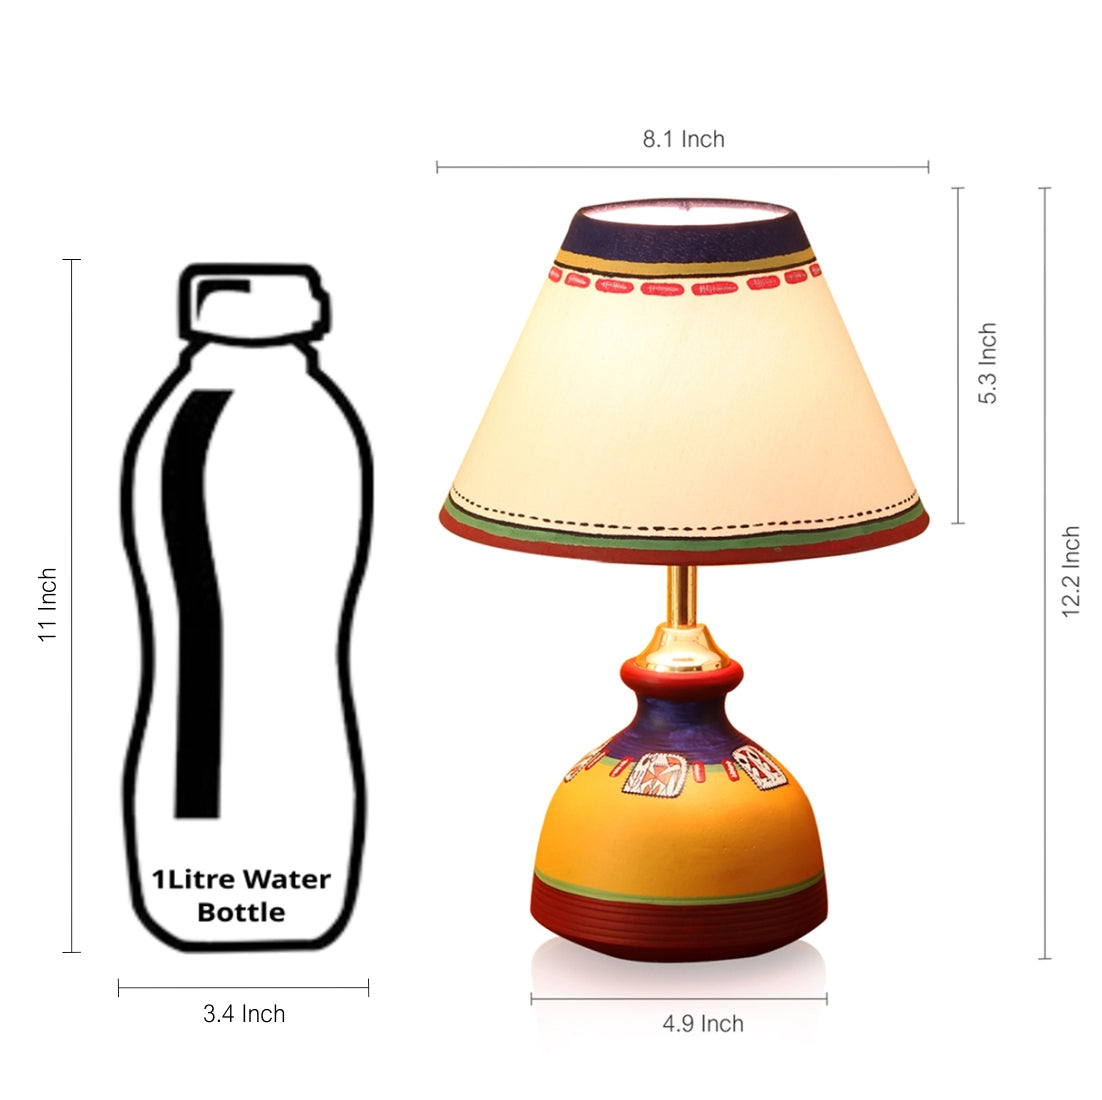 Terracotta Table Lamp